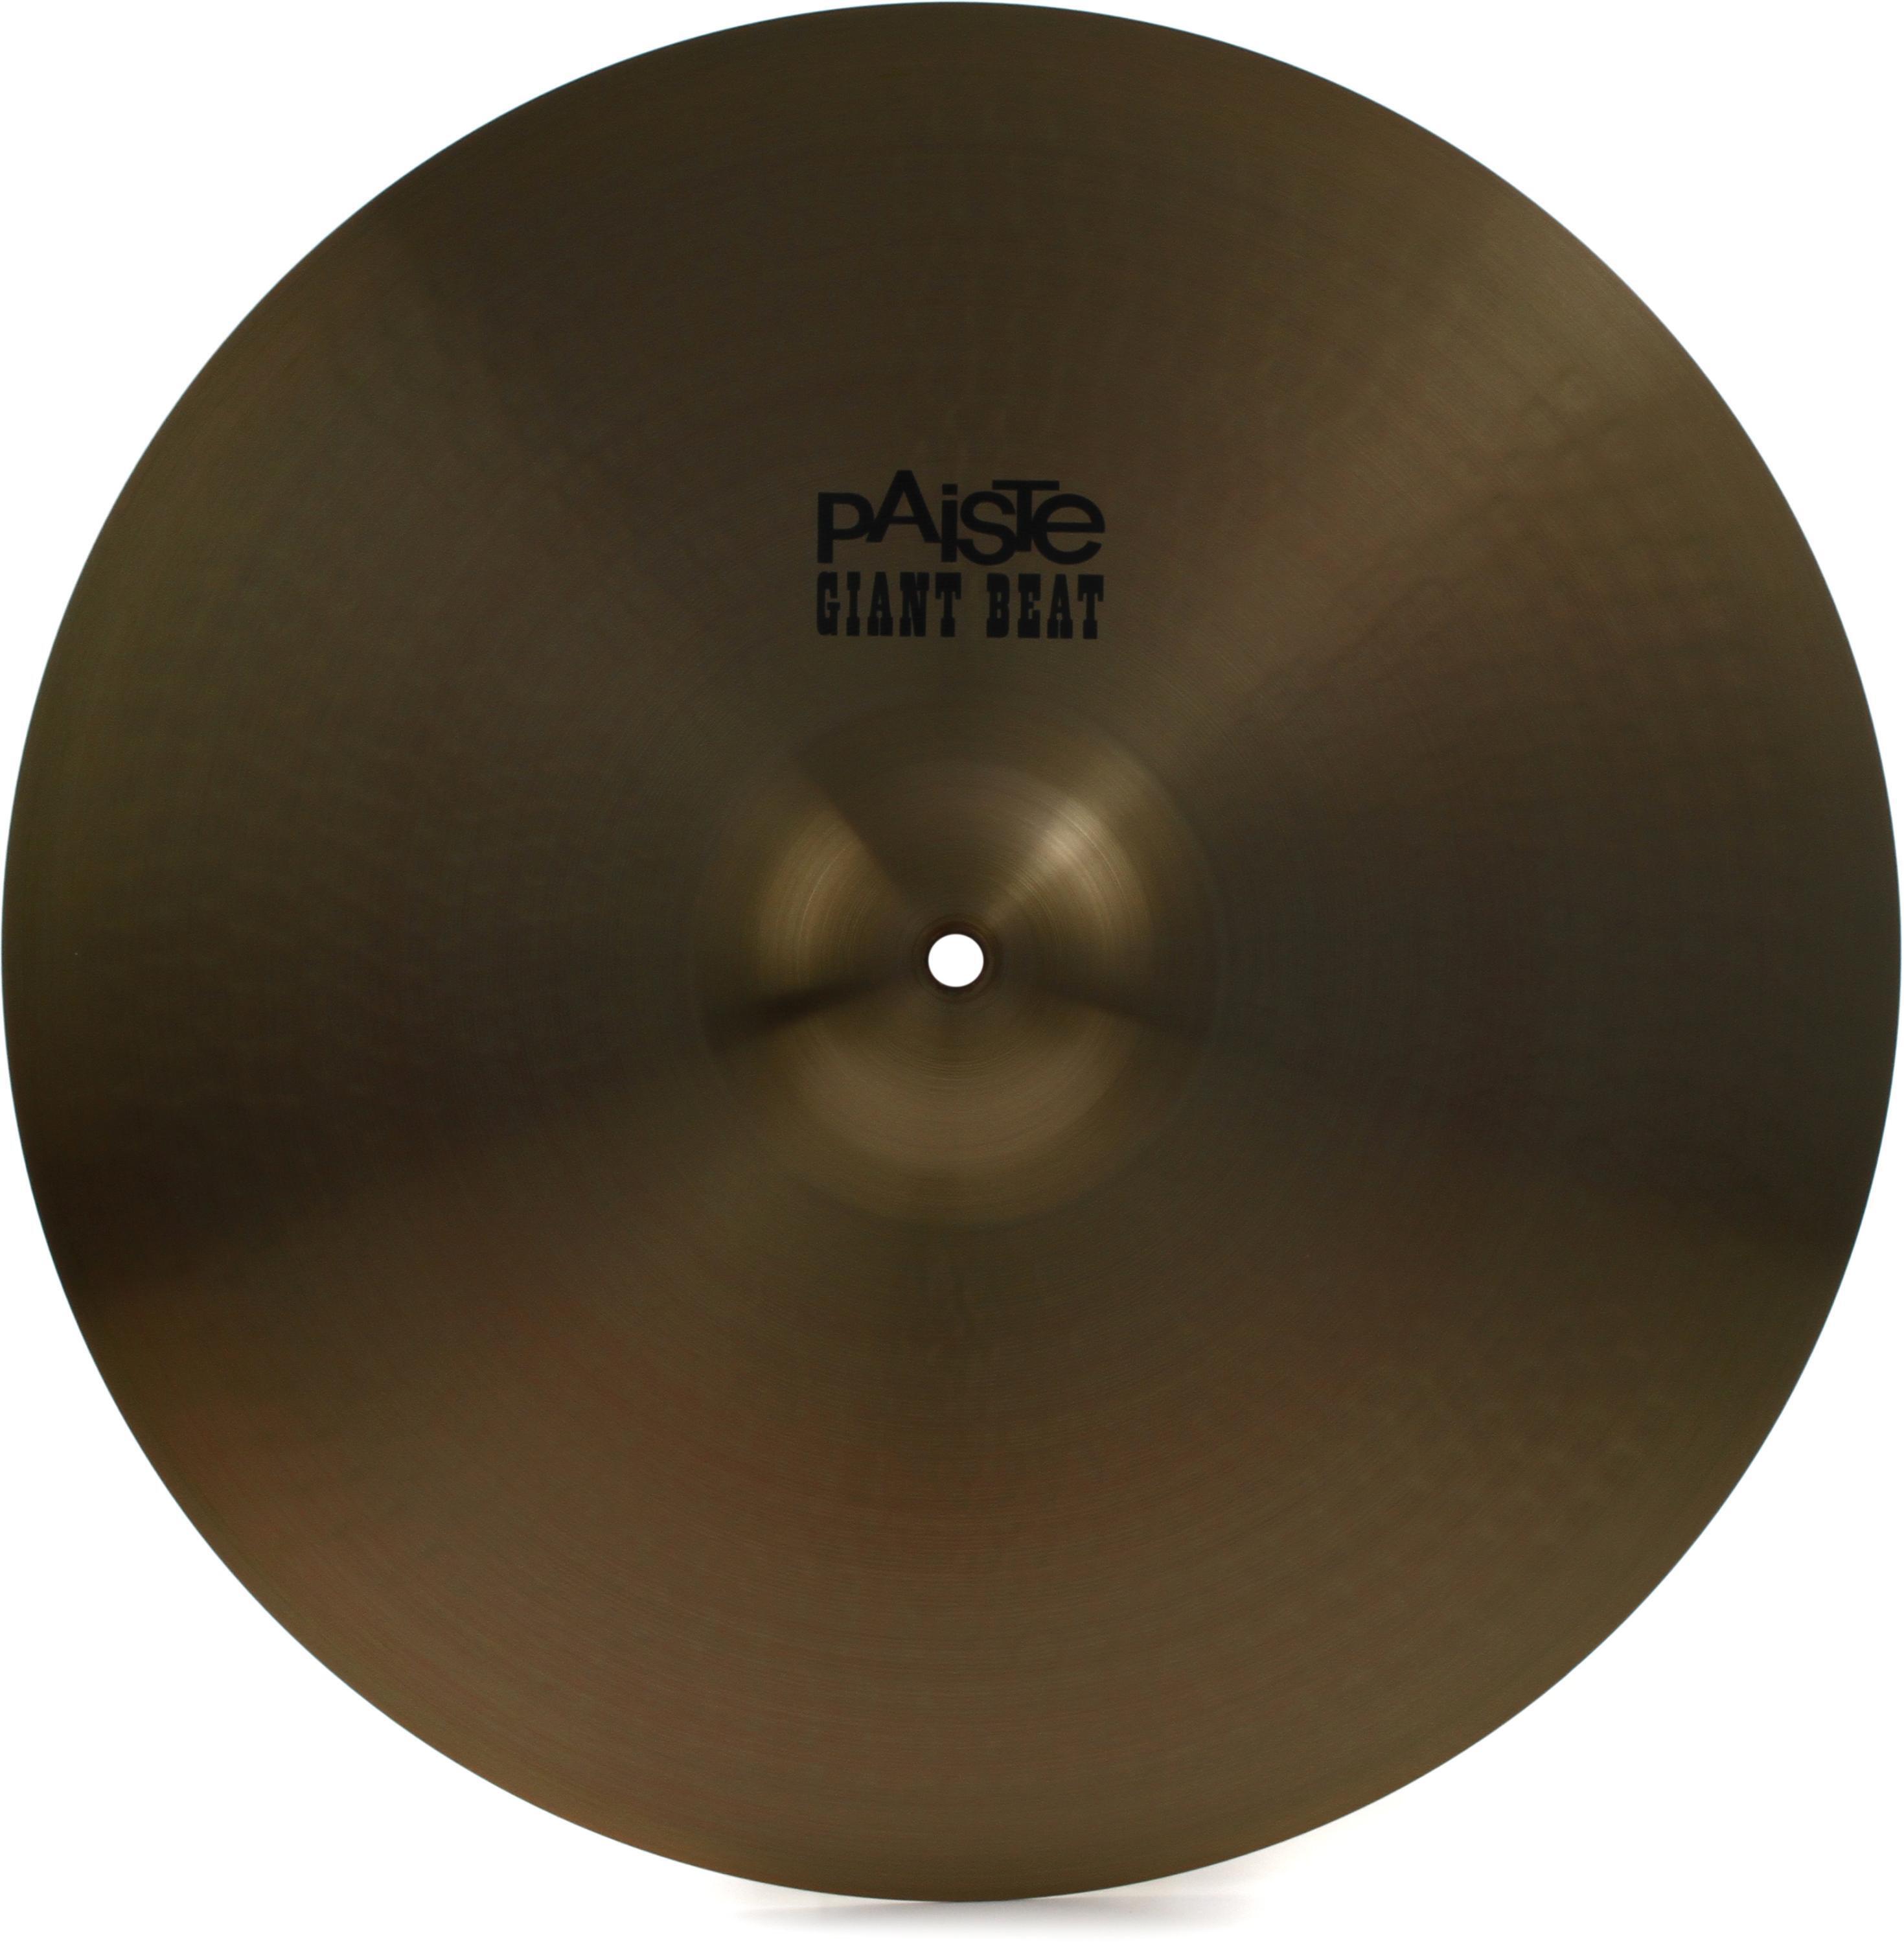 Paiste 18 inch Giant Beat Crash / Ride Cymbal